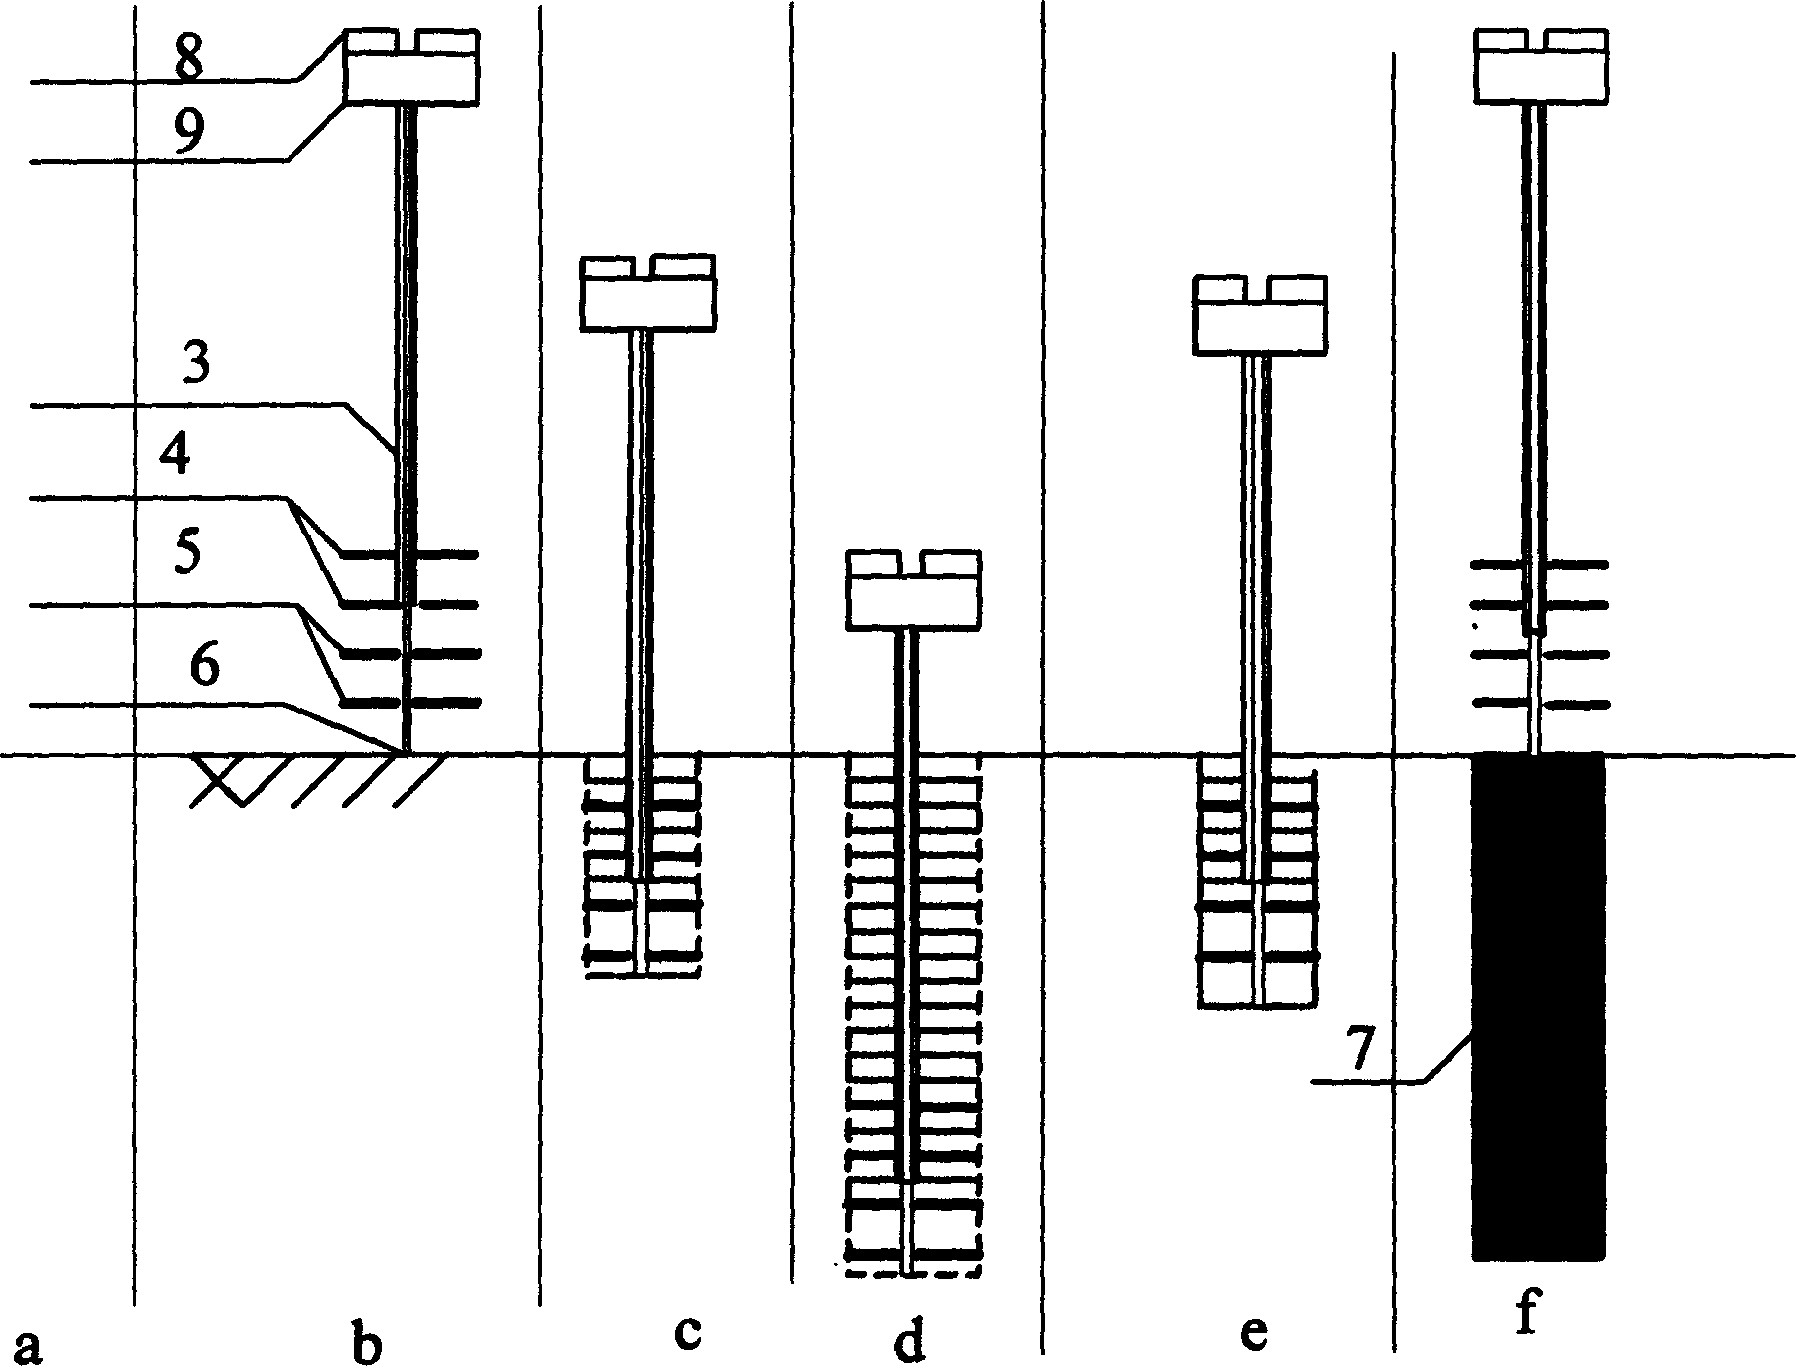 Pile forming operation method for bi-directional stirring piles